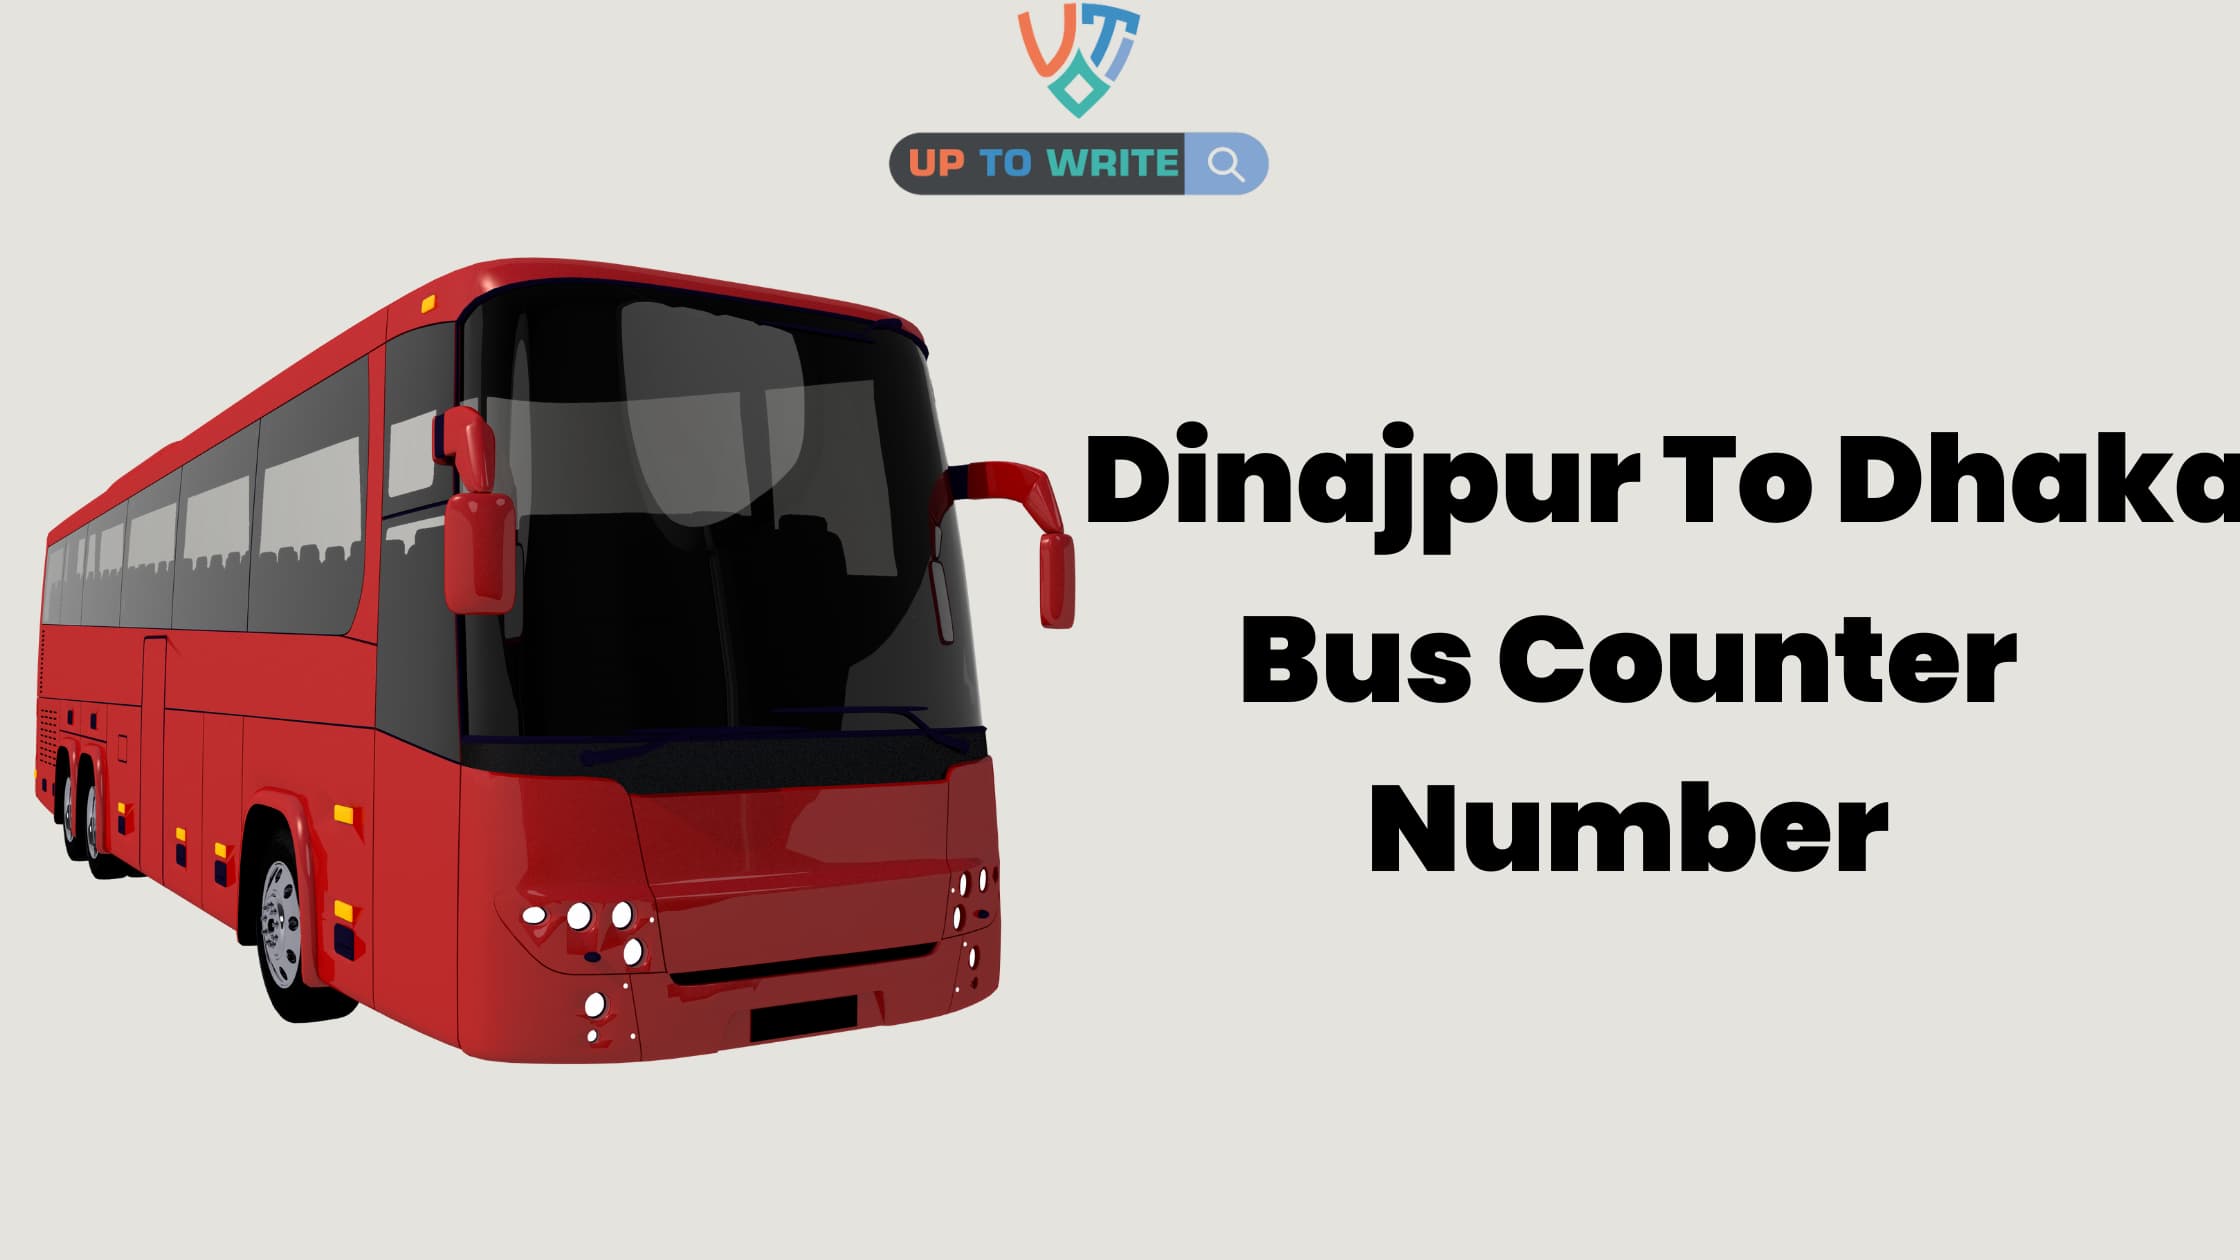 Dinajpur To Dhaka Bus counter number